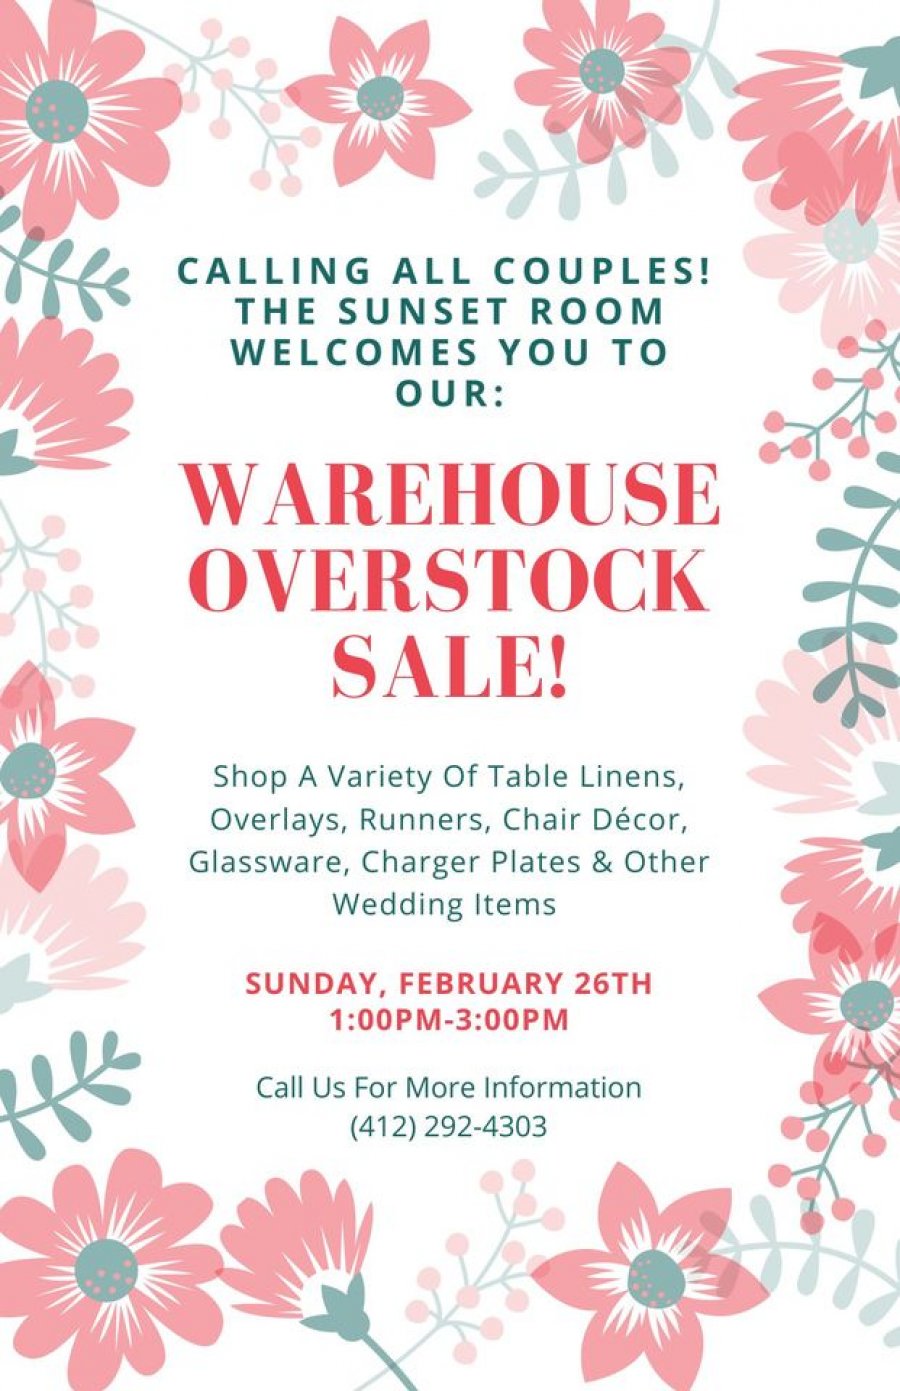 Sunset Room Warehouse Overstock Sale